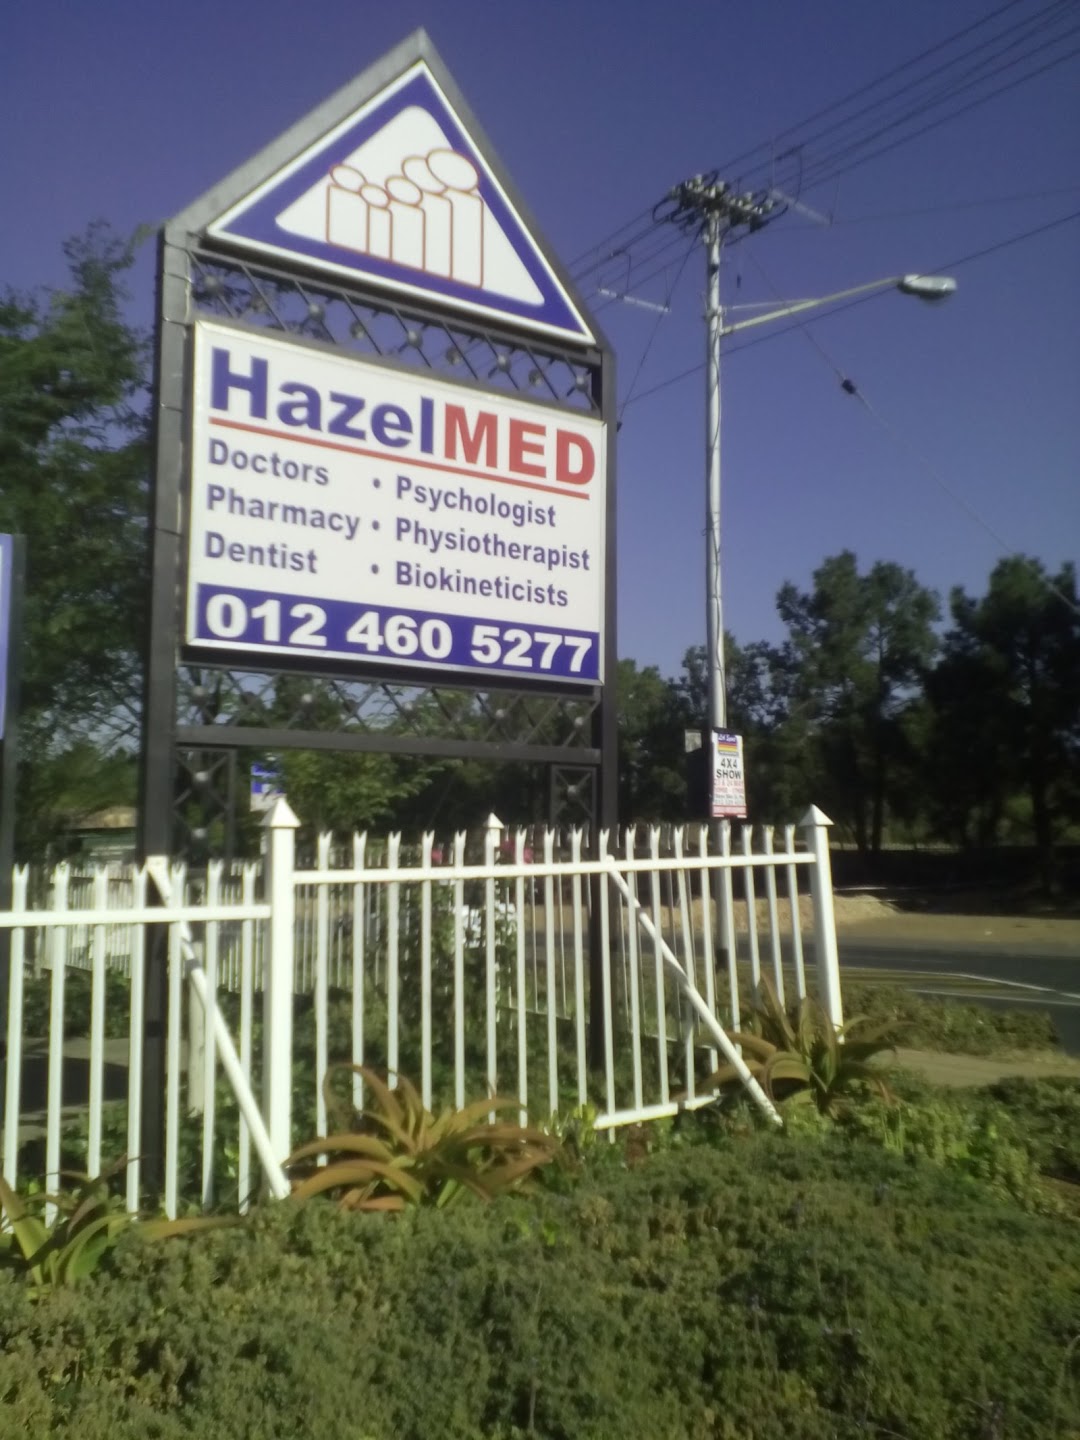 Hazelmed Medical Centre